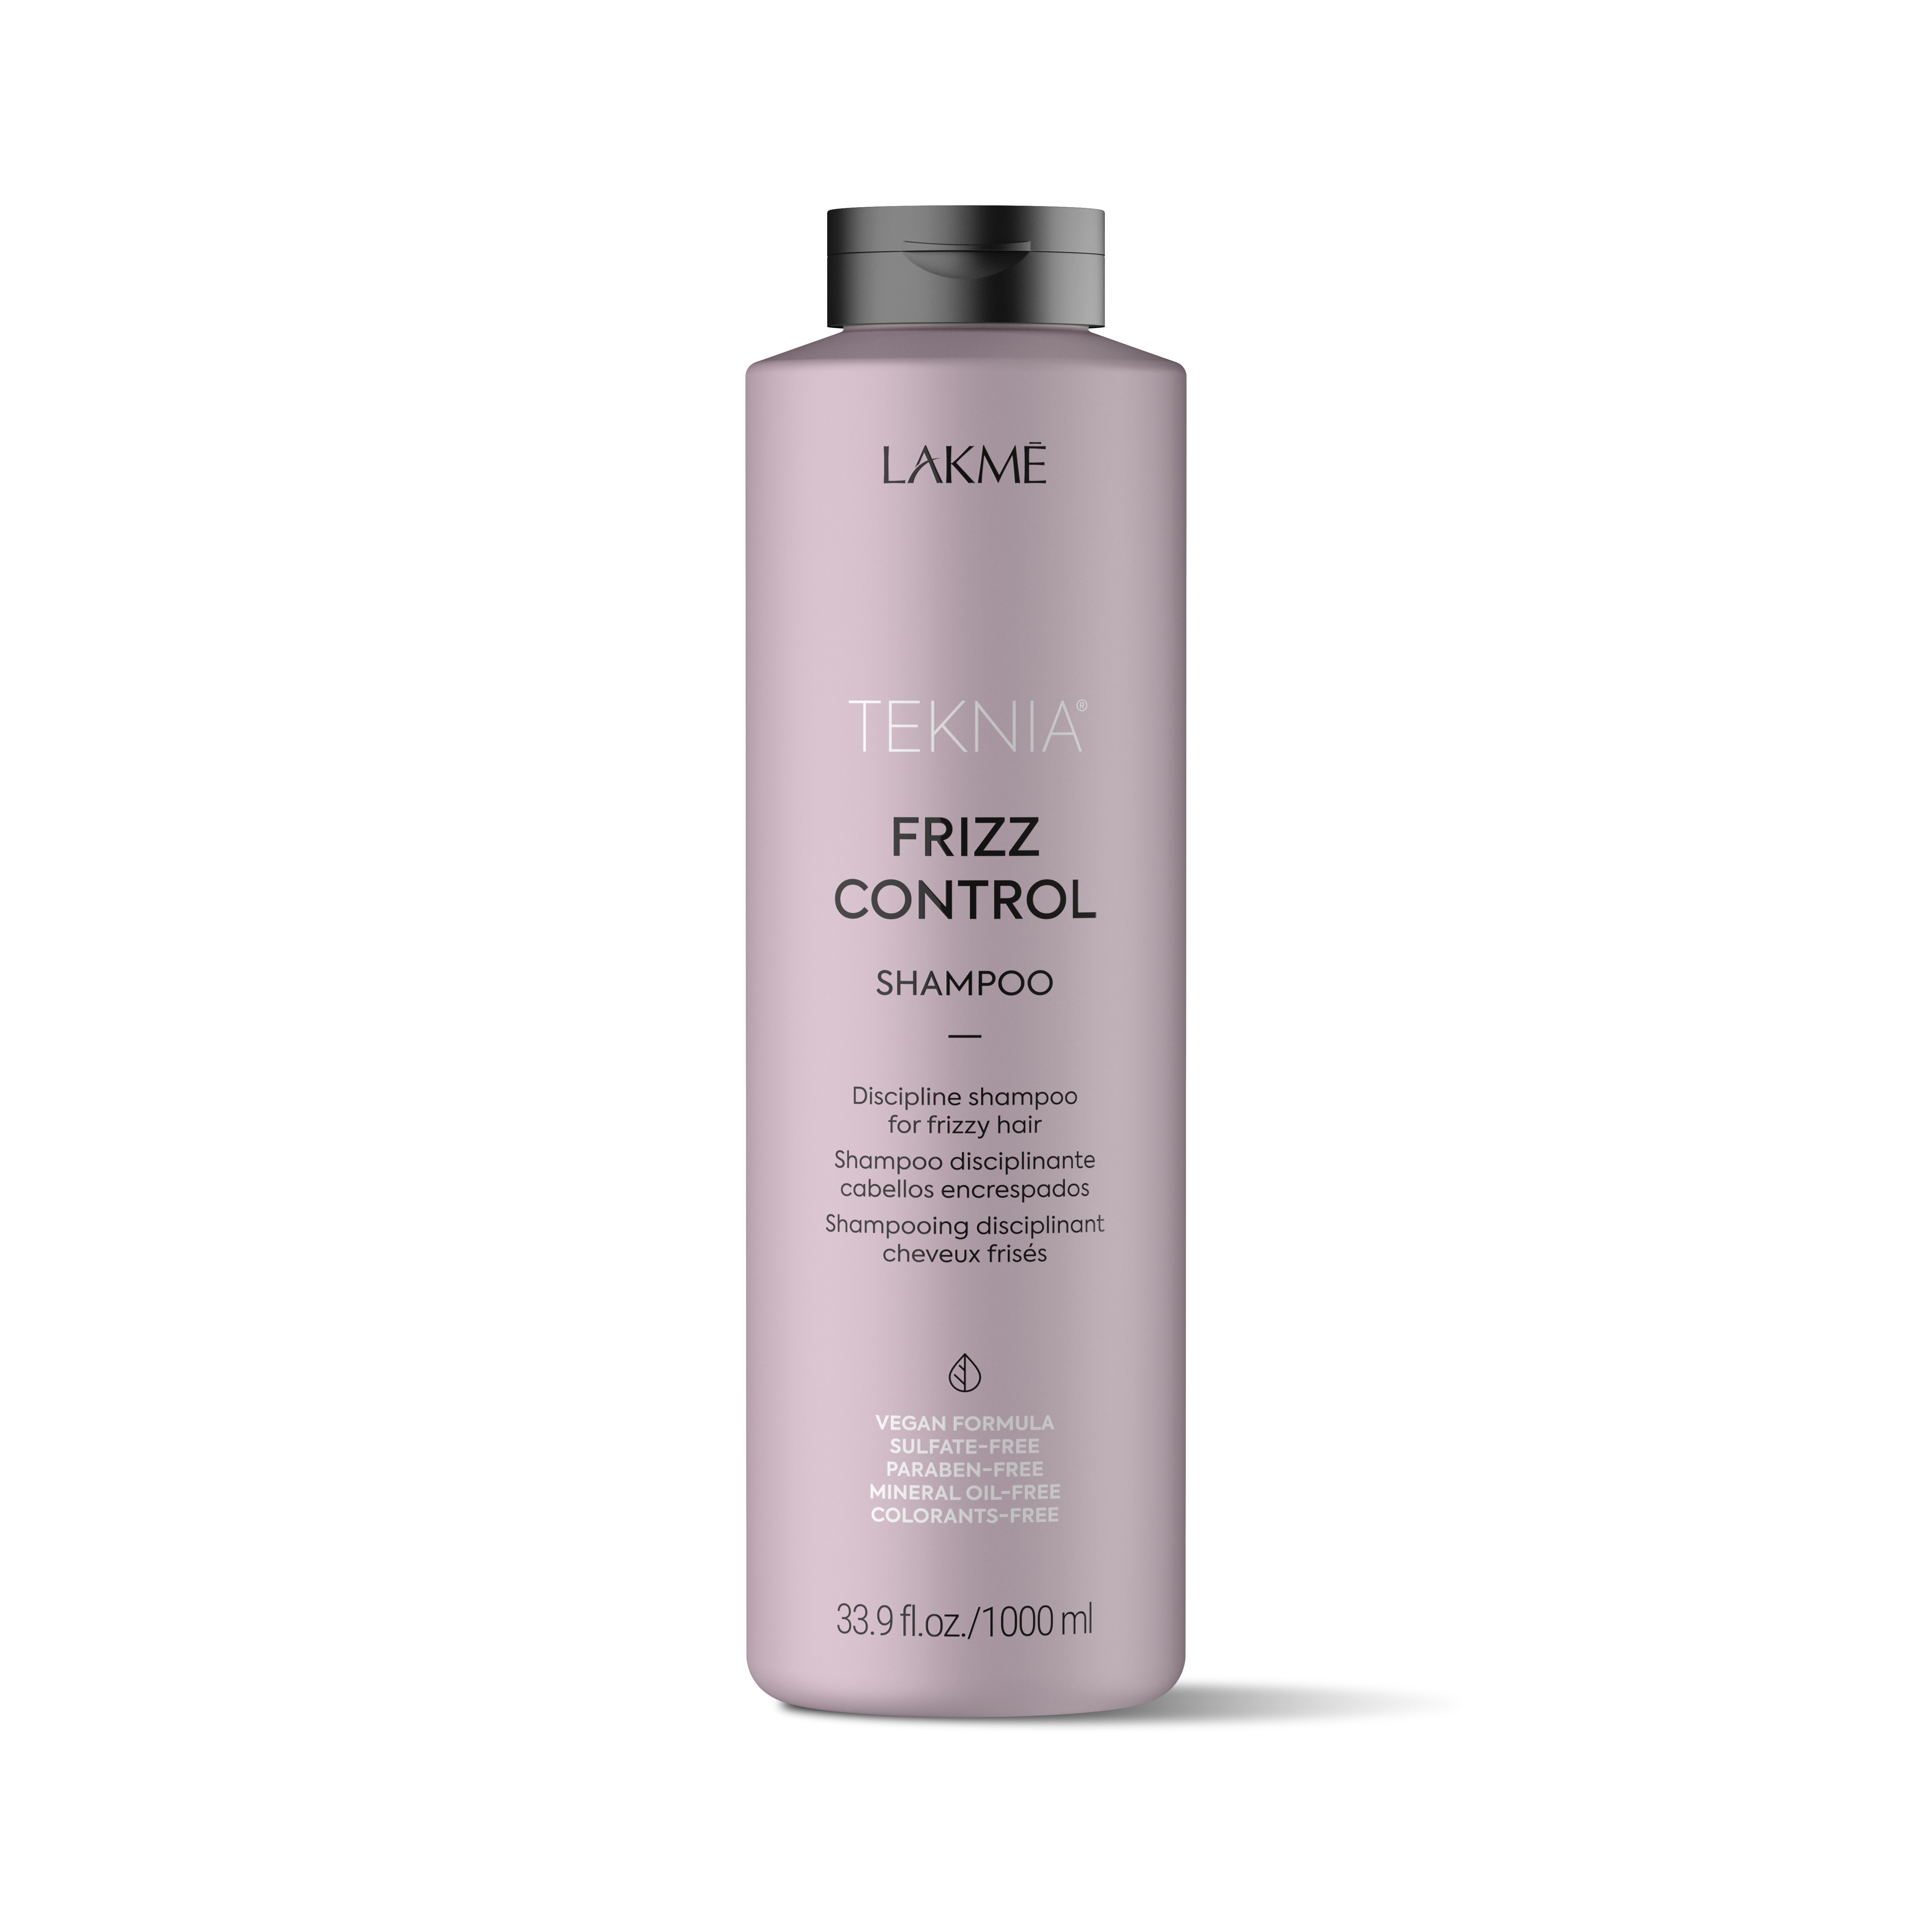 Lakmé - Teknia Frizz Control Shampoo 1000 ml - Skjønnhet